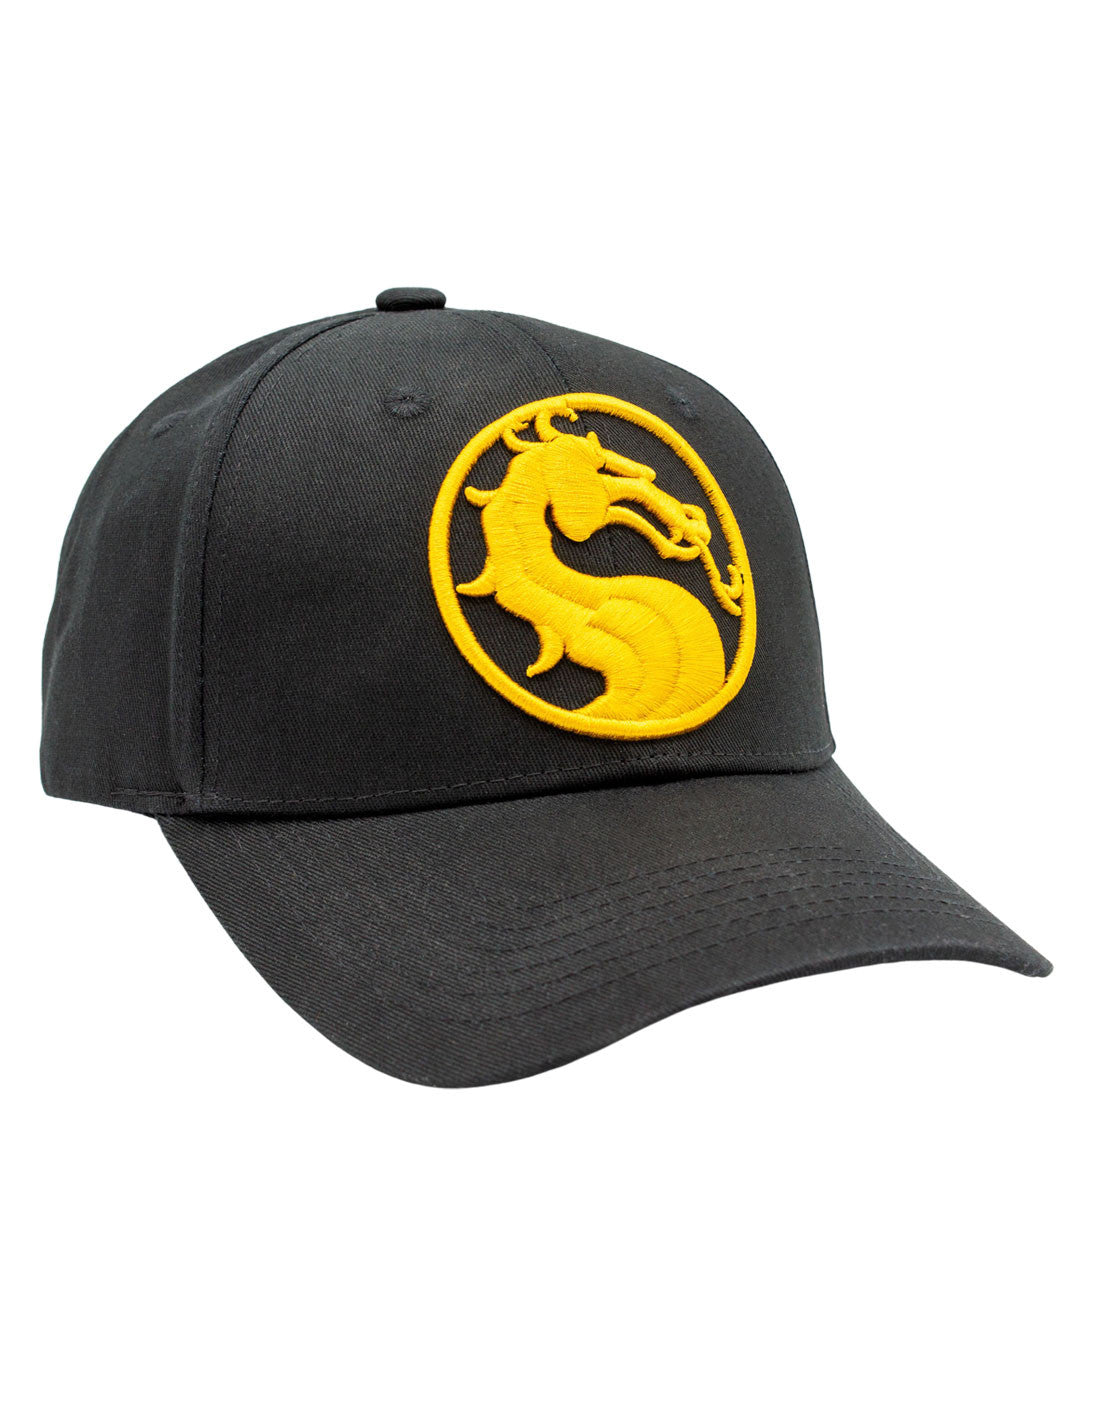 Mortal Kombat Cap - Logo